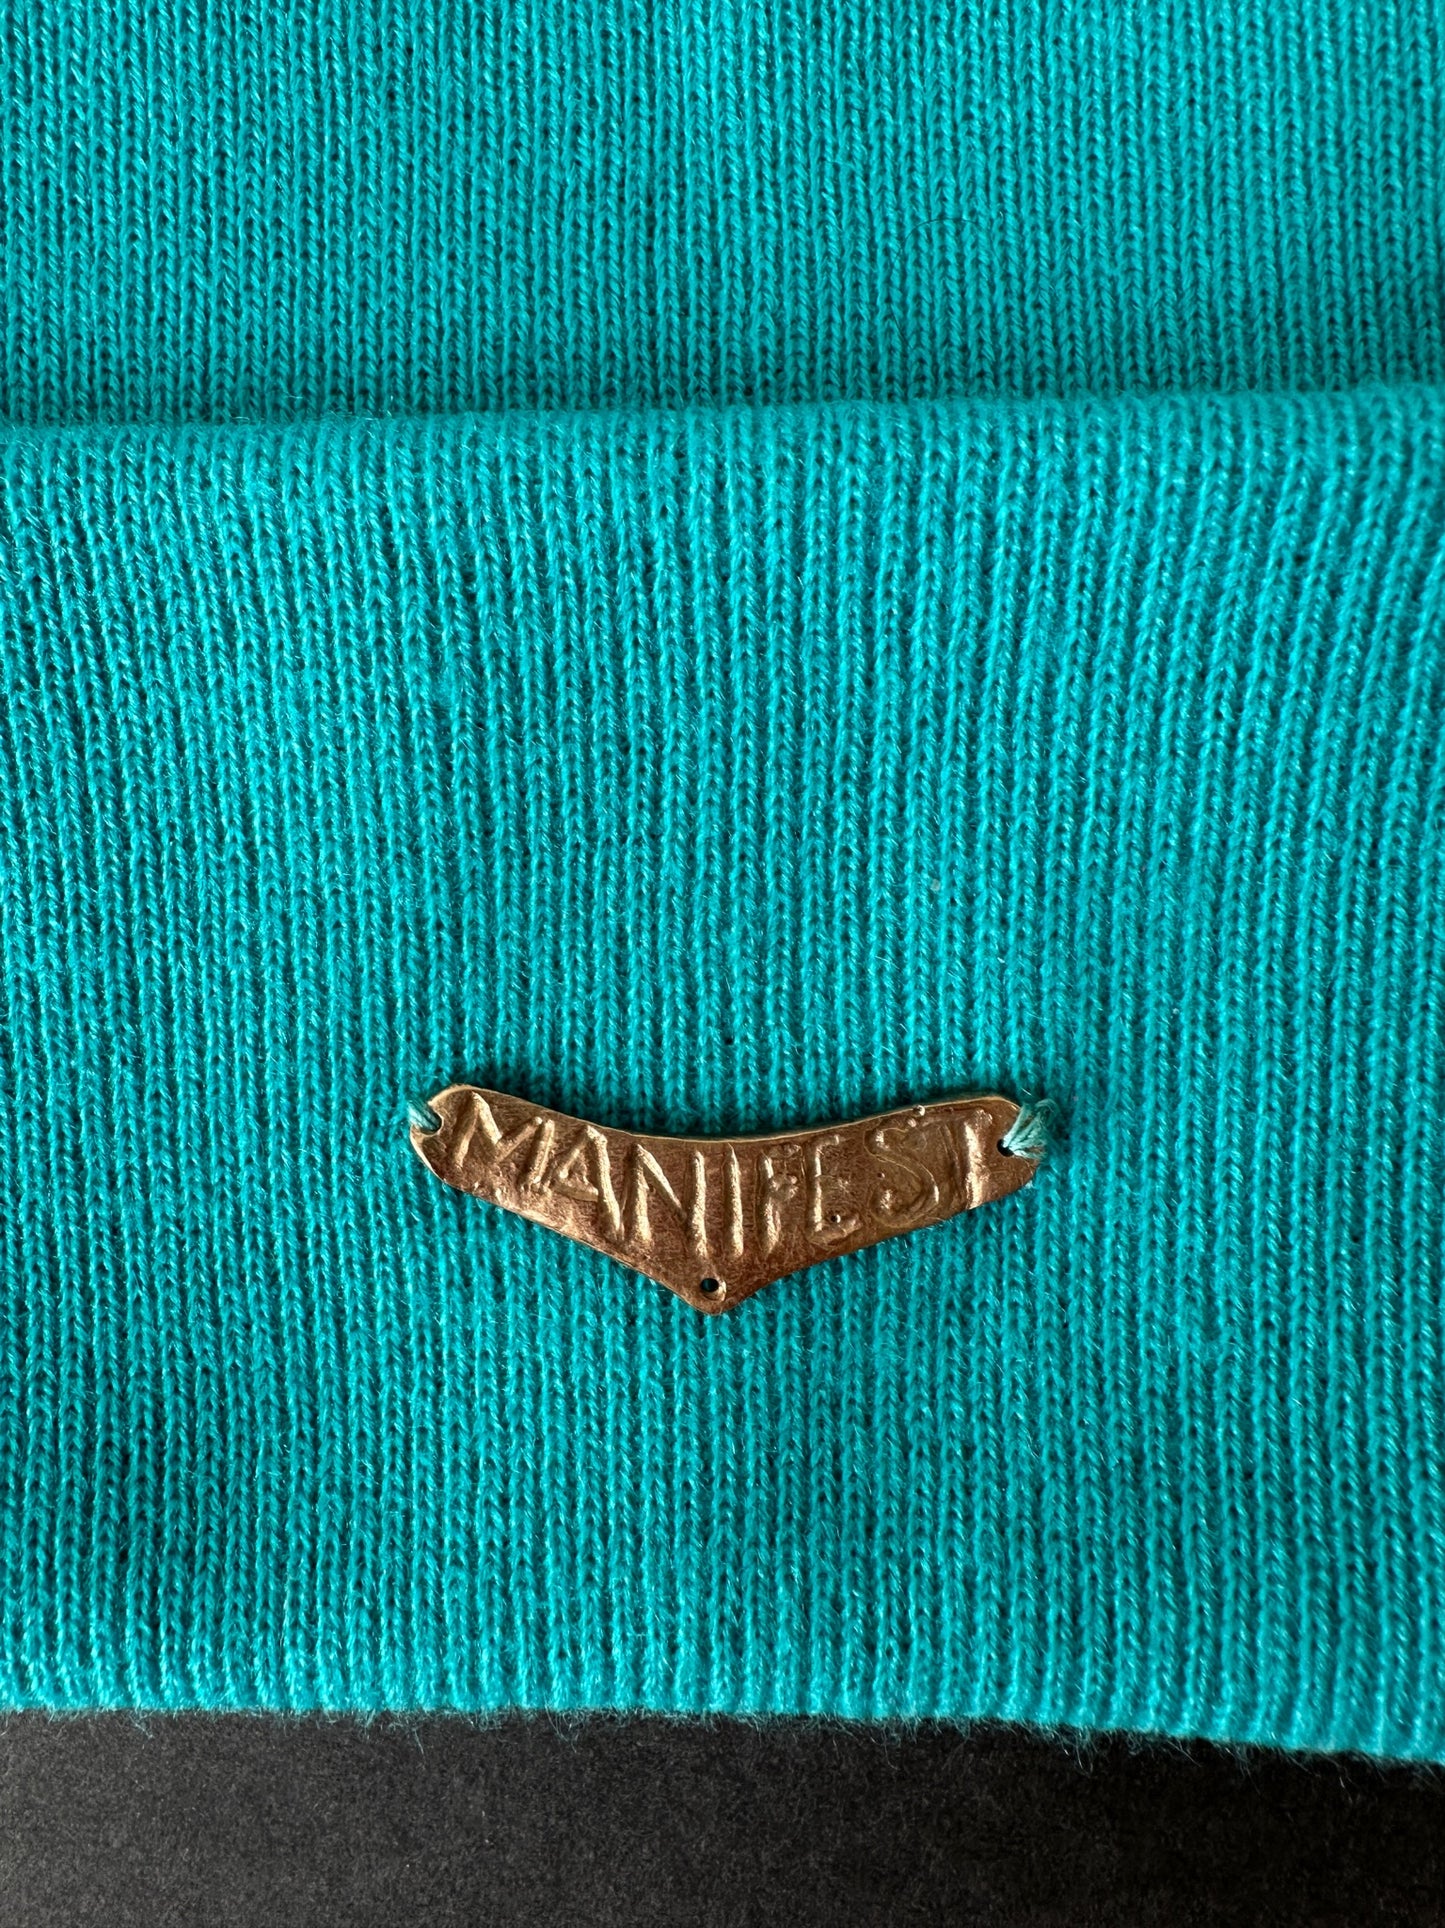 025. Bronze “MANIFEST” Beanie in turquoise